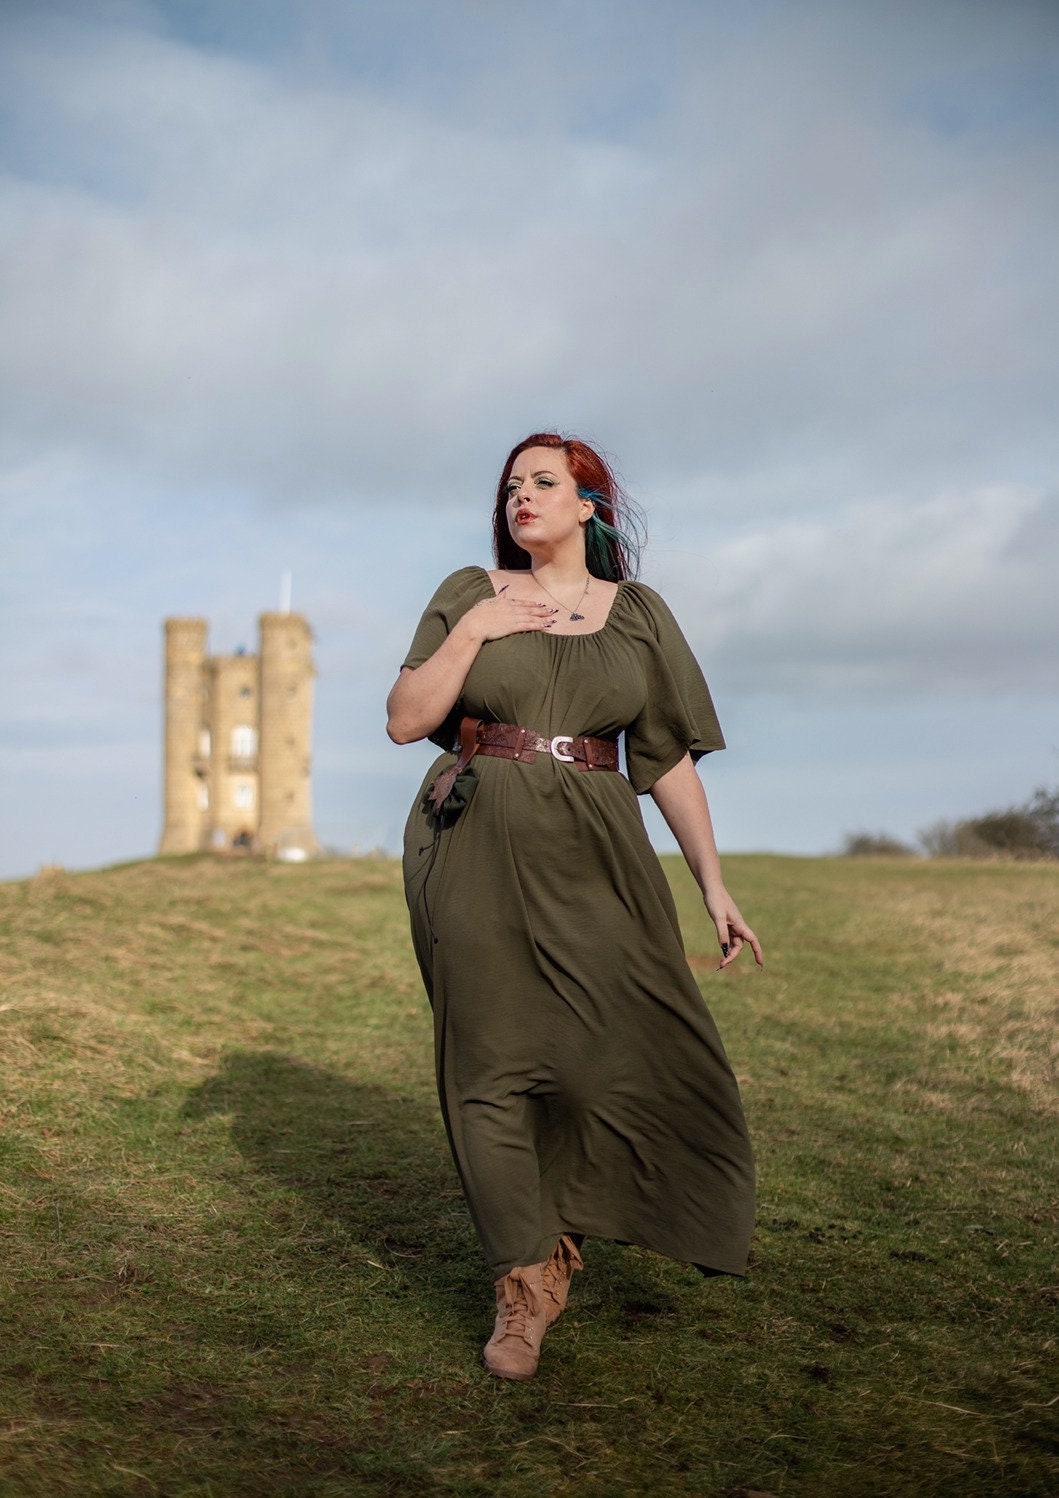 Chemise Woman Shirt Dress Renaissance Peasant Underdress Steampunk Larp  Pirate Fantasy Medieval Renaissance Costume Cosplay 